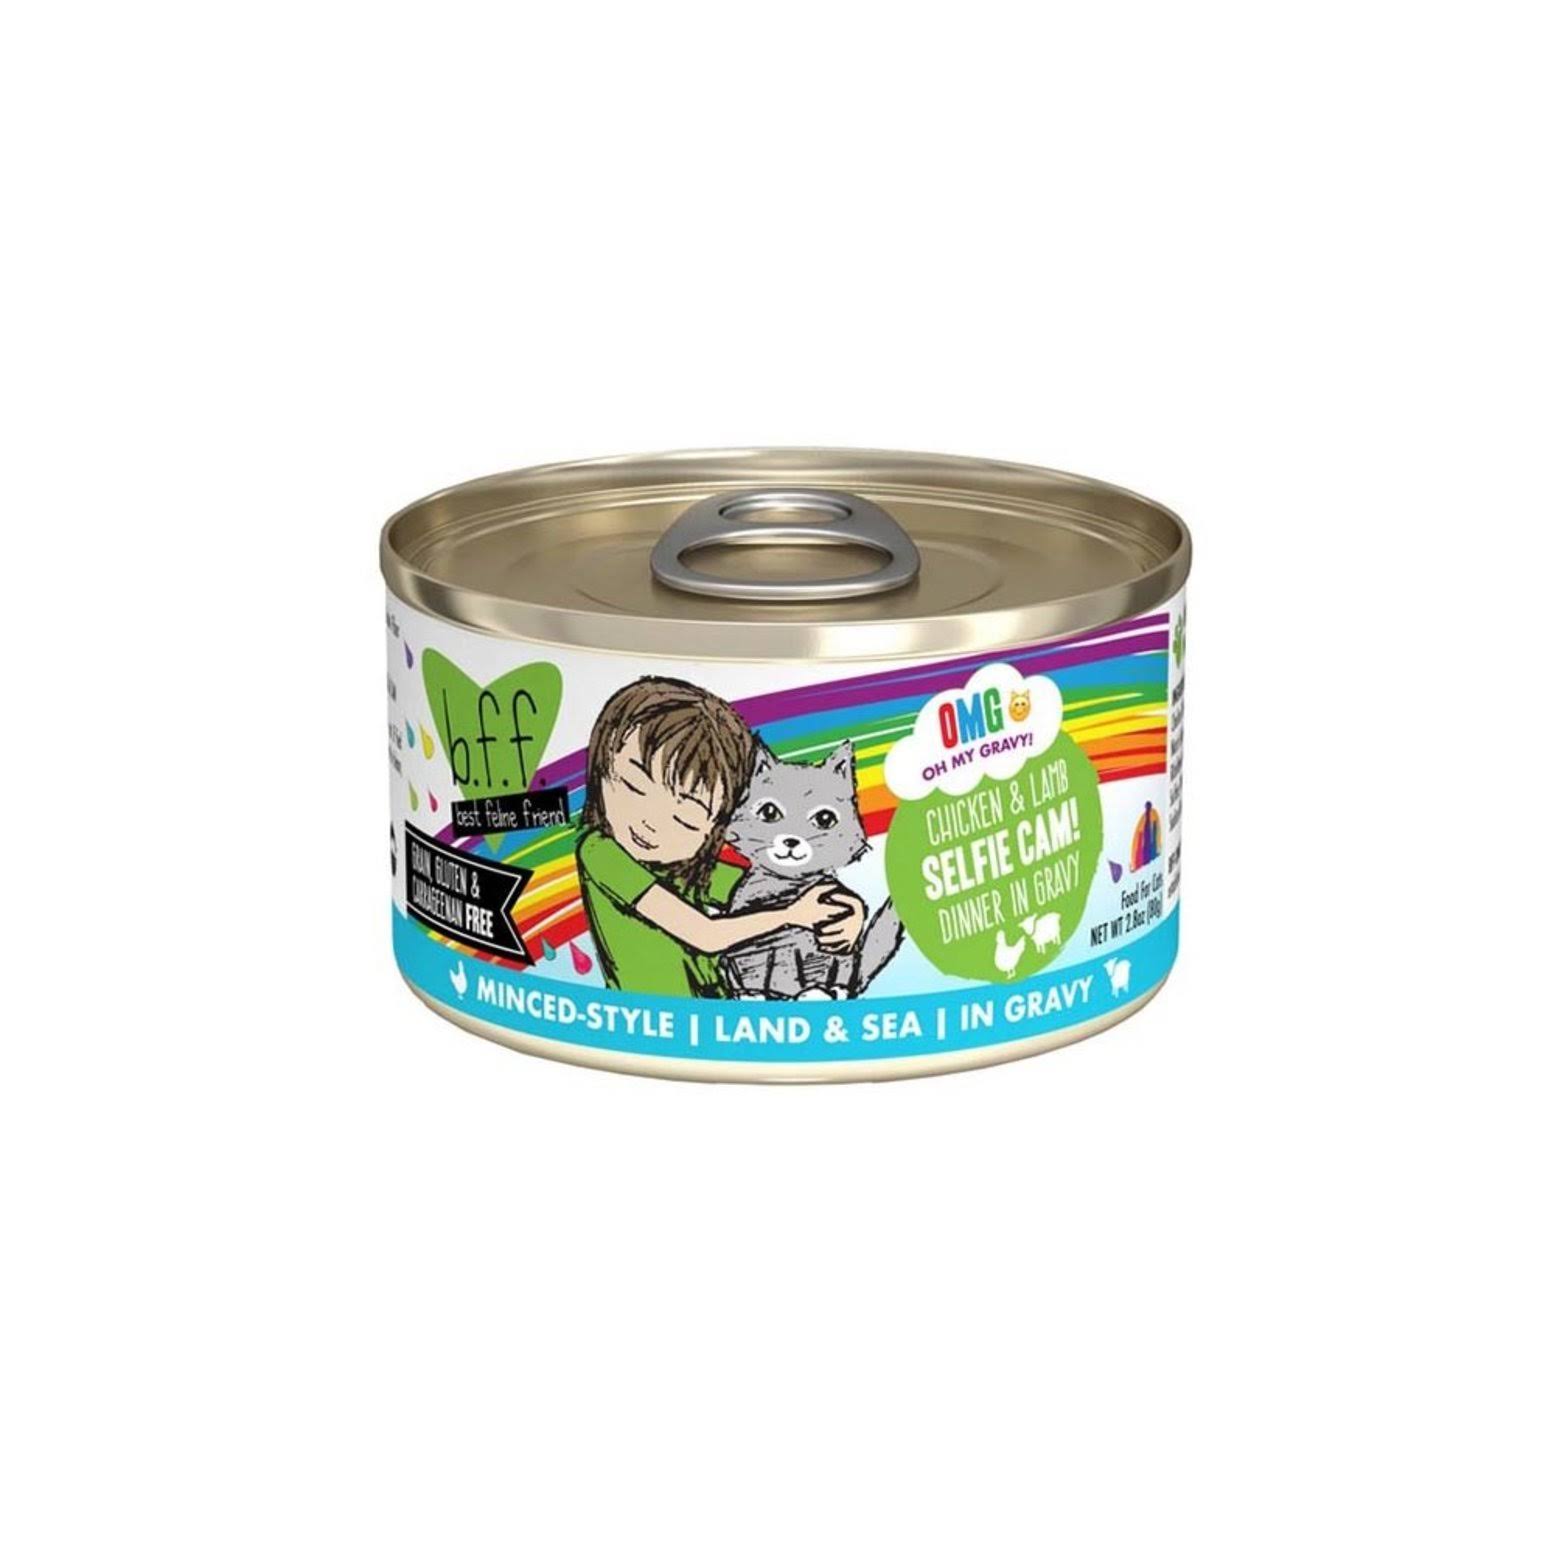 Weruva Canned Cat Food - Selfie Cam - Chicken & Lamb | Size: 156 g